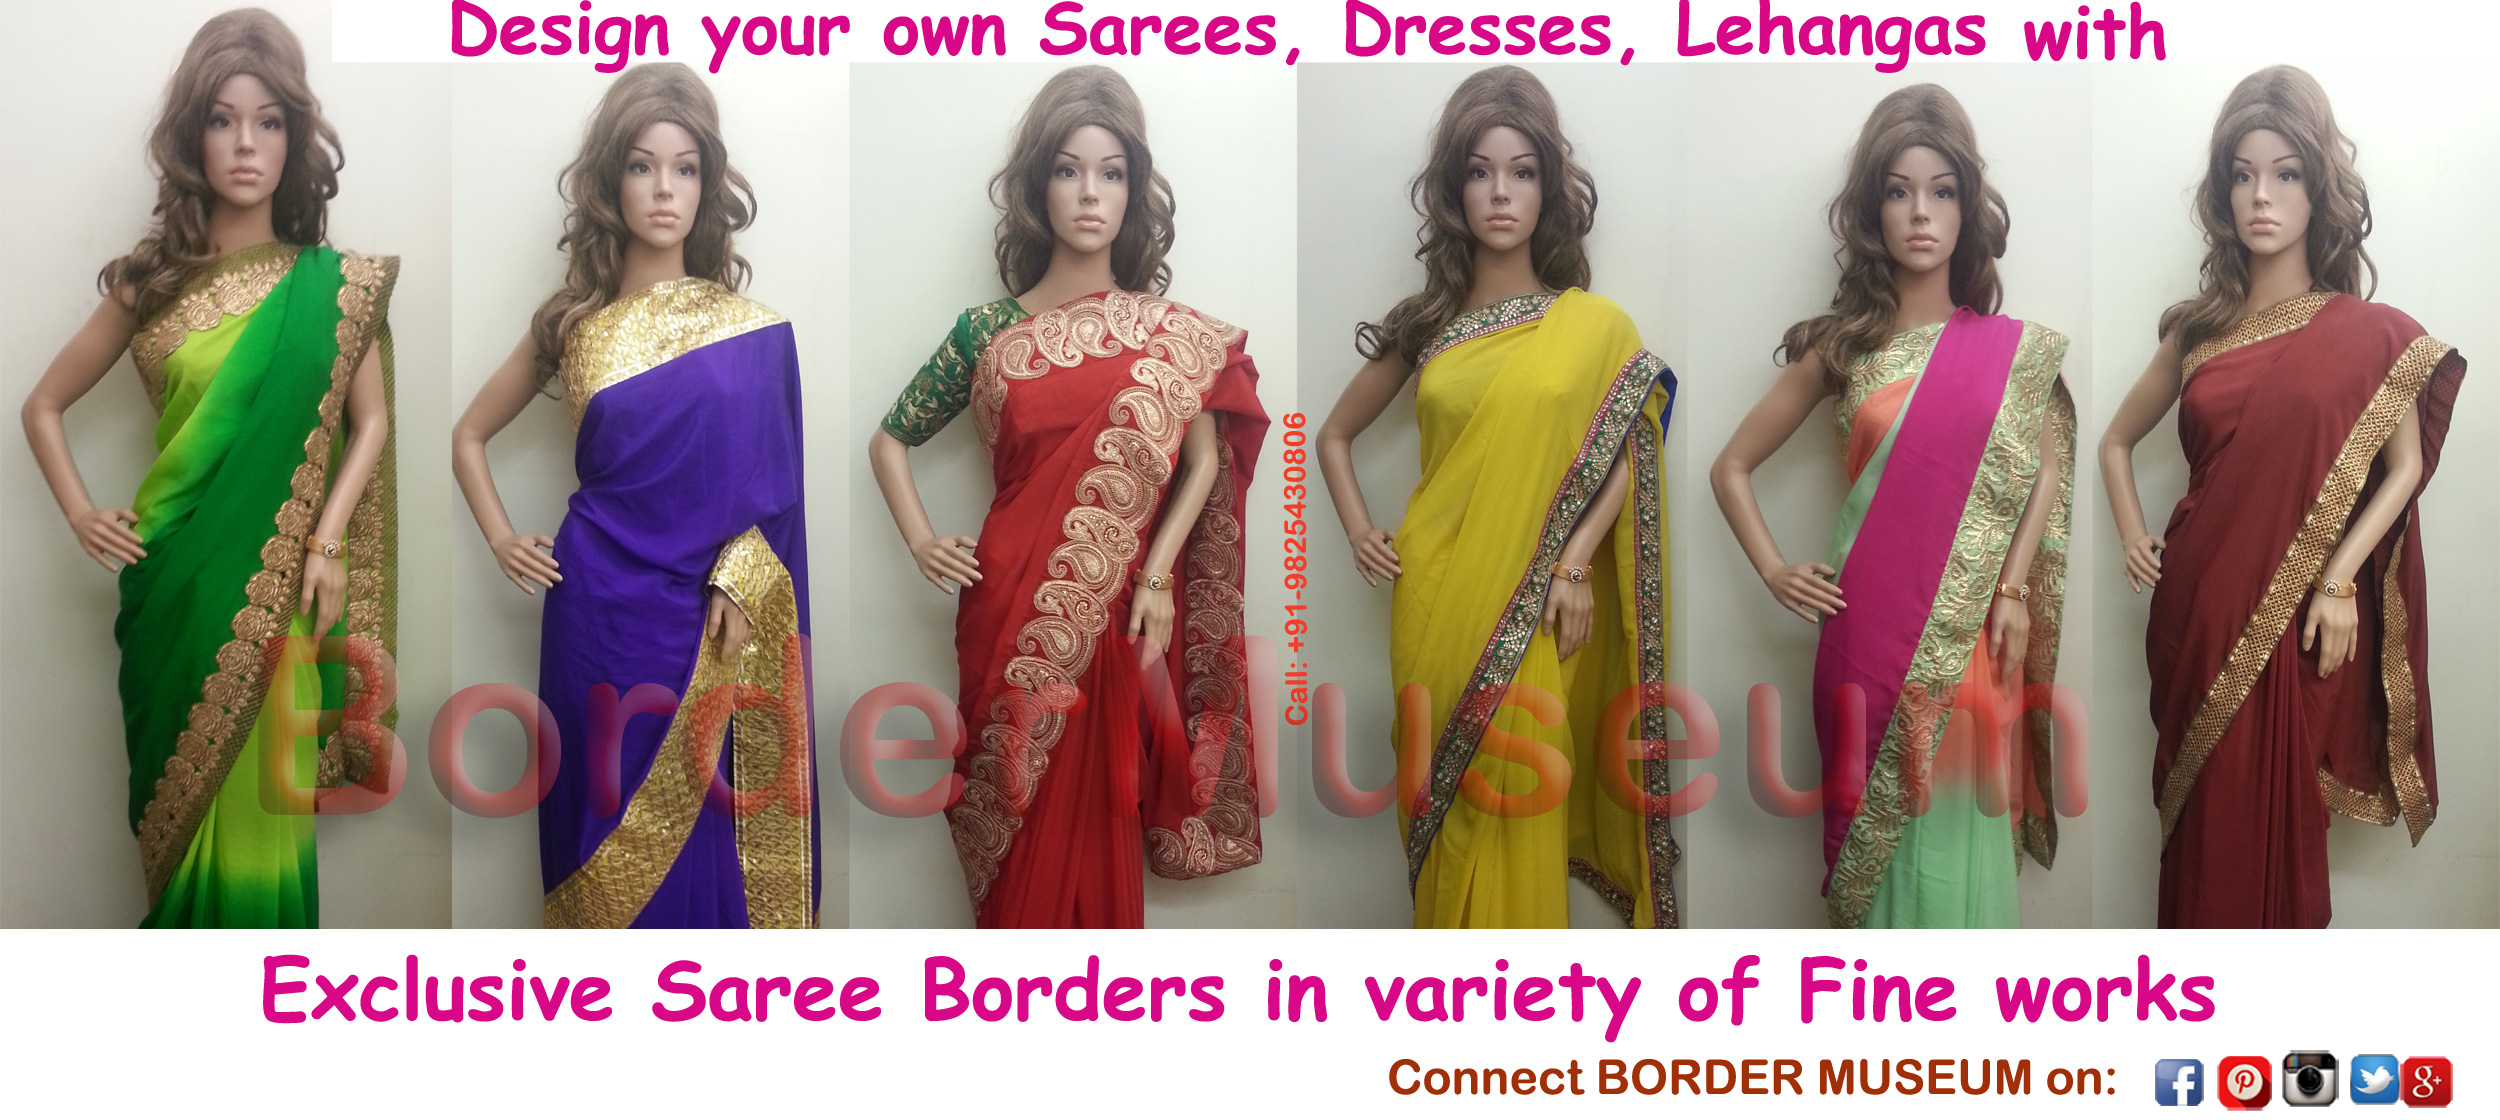 Design Sarees with Border at BORDER MUSEUM by Kamal Jain - Copy